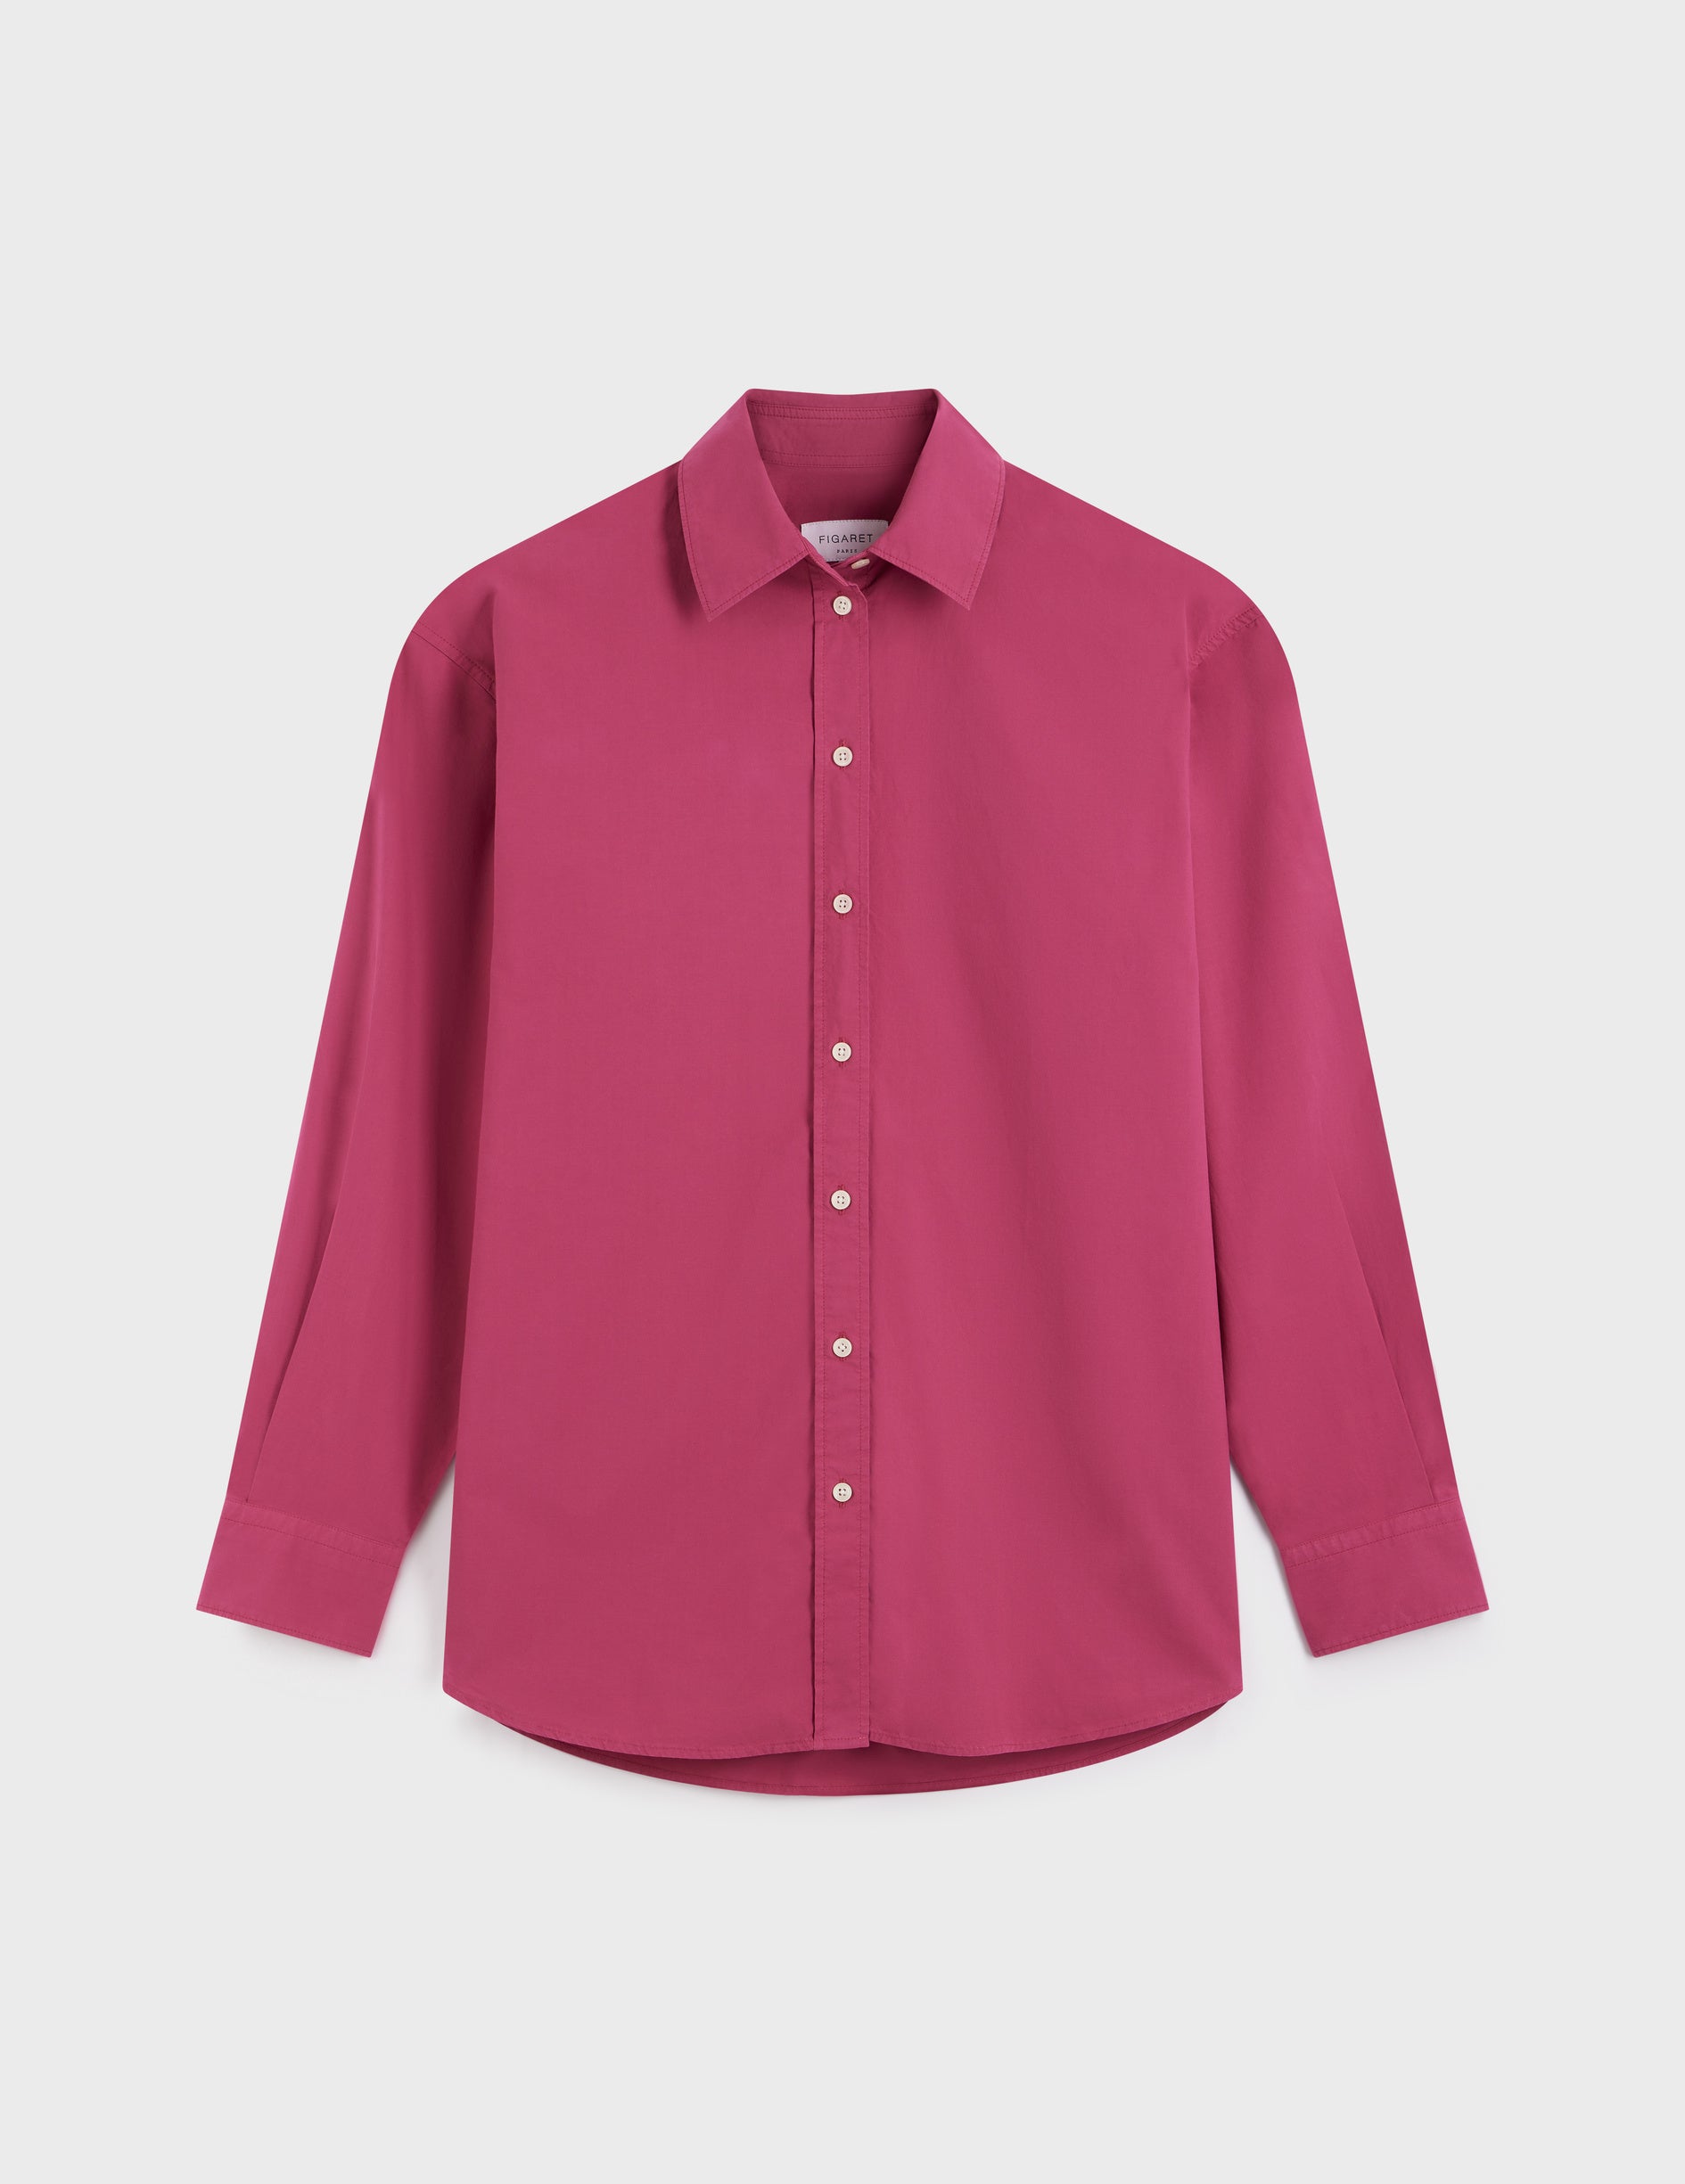 Oversized fuchsia pink Delina shirt - Poplin